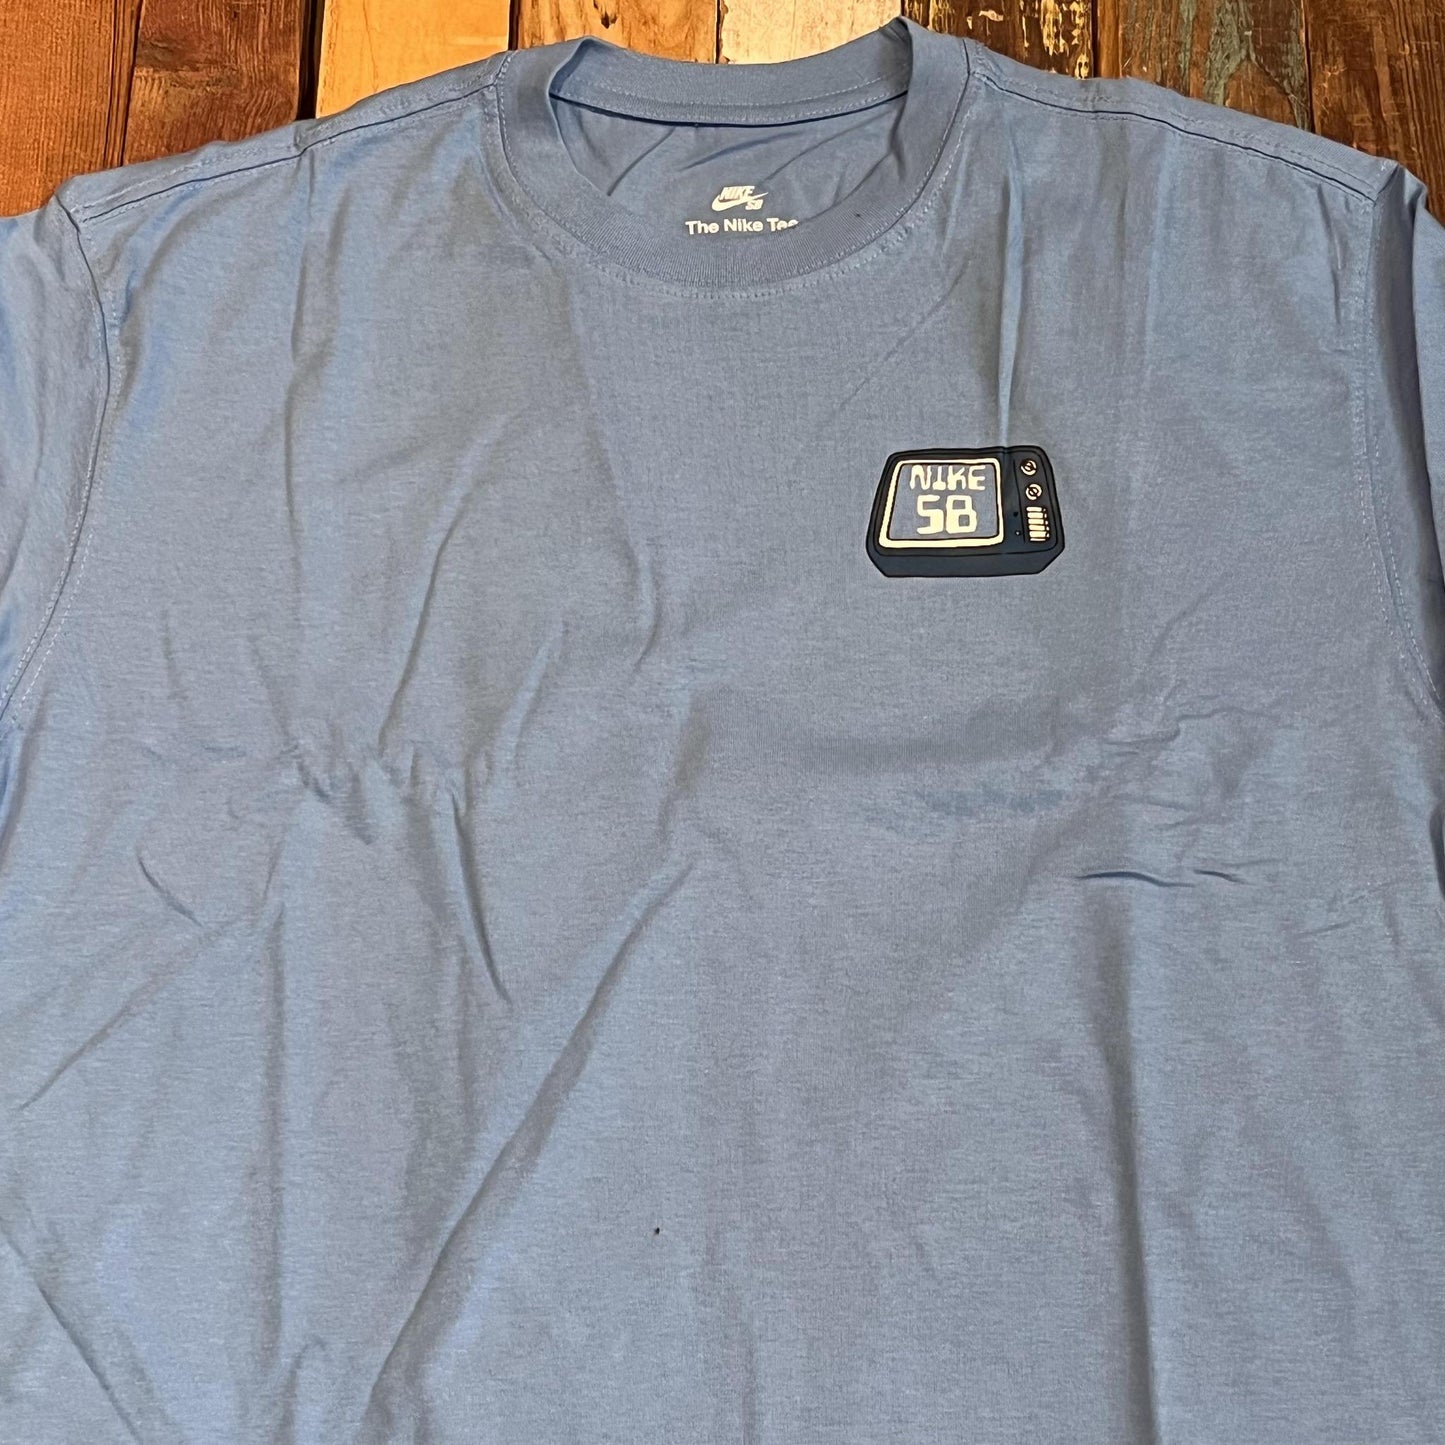 Nike SB M90 Brainwash L/S Shirt - University Blue